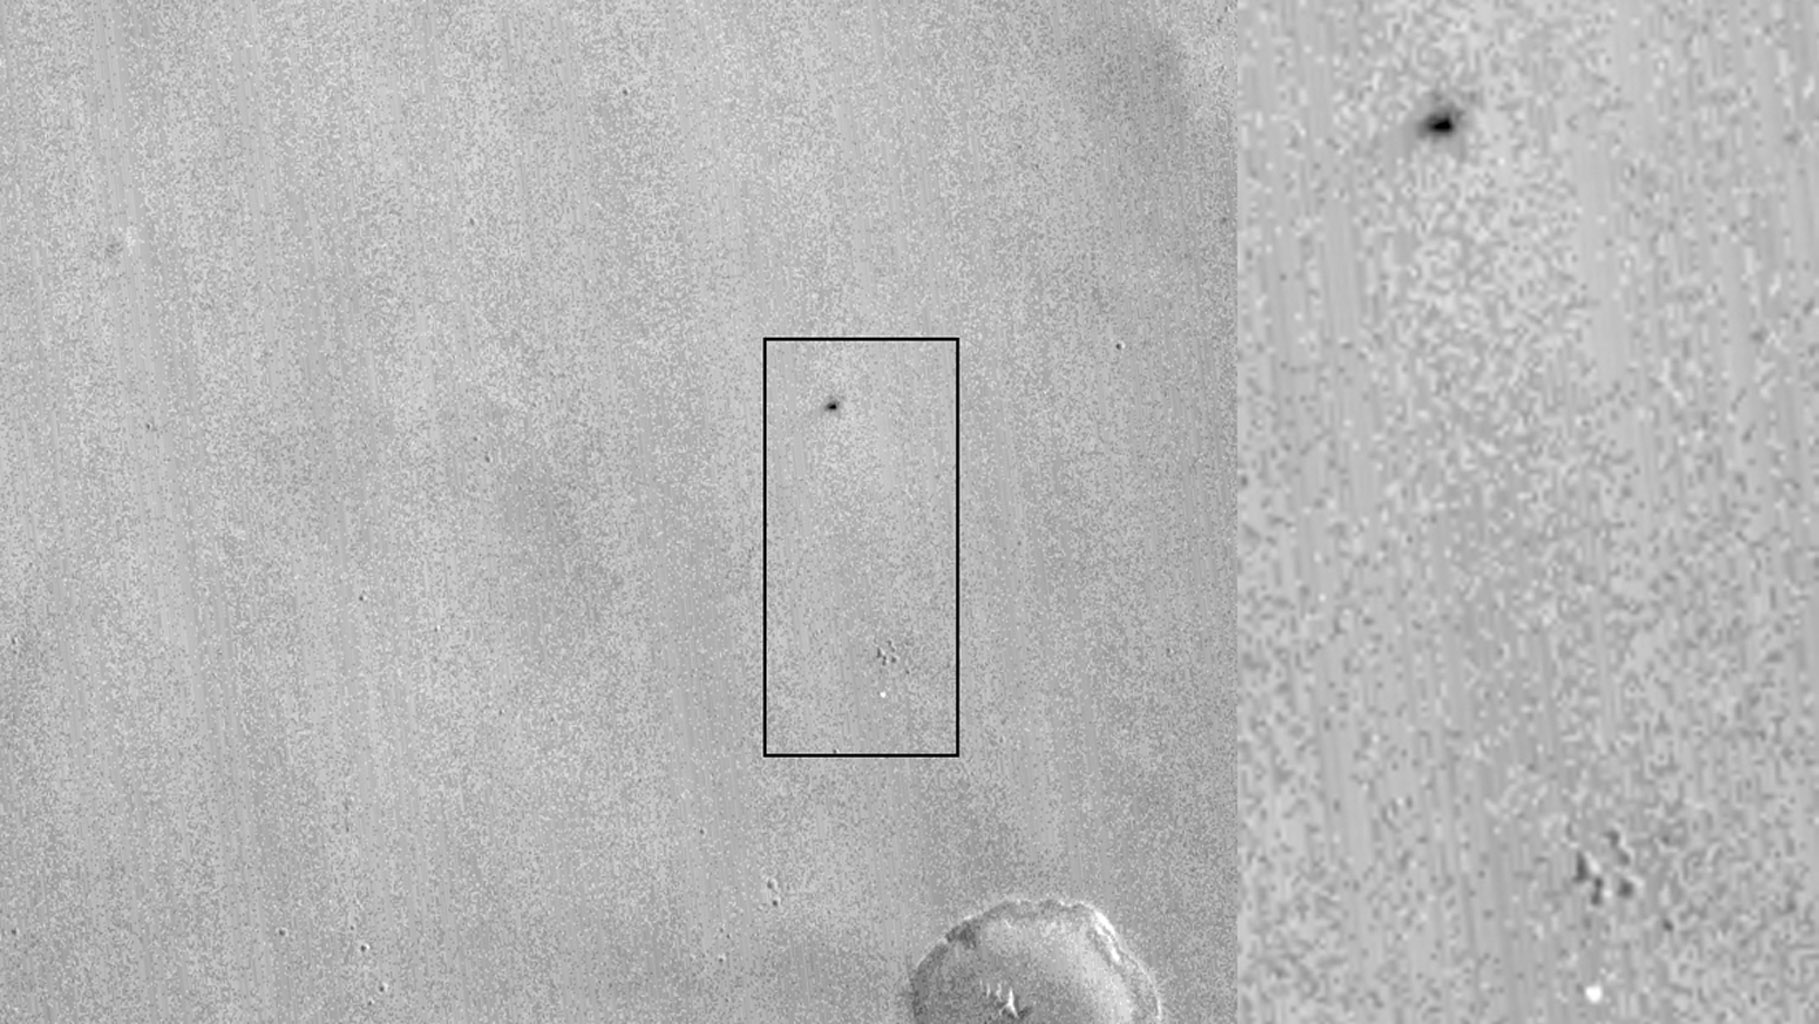 RIP, Schiaparelli: European Mars Lander's Crash Site Seen By NASA Probe - Space.com